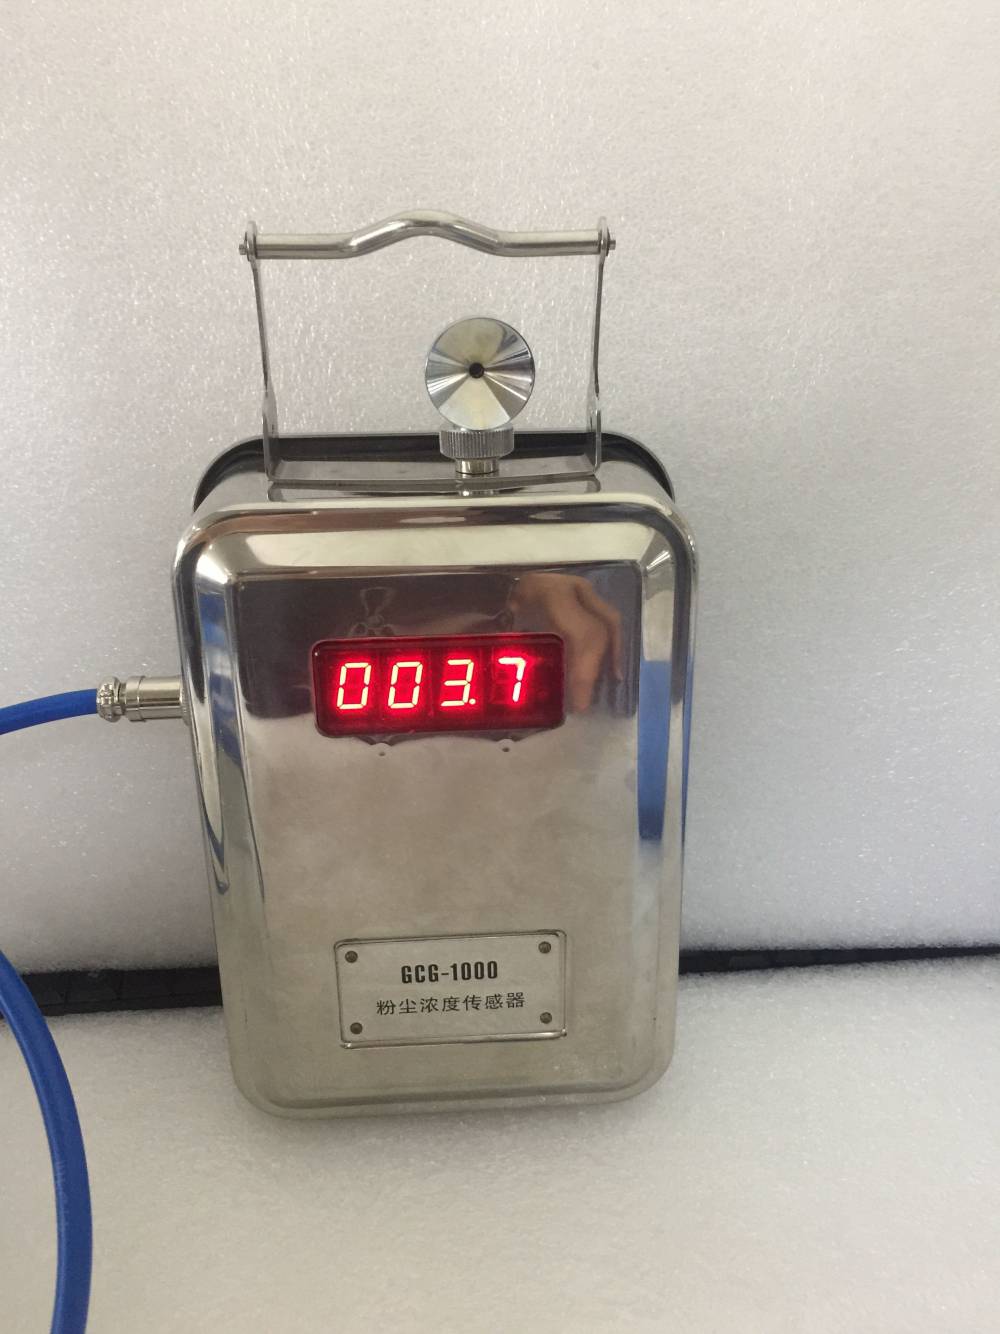 GCG-1000型粉尘浓度传感器在线粉尘检测仪